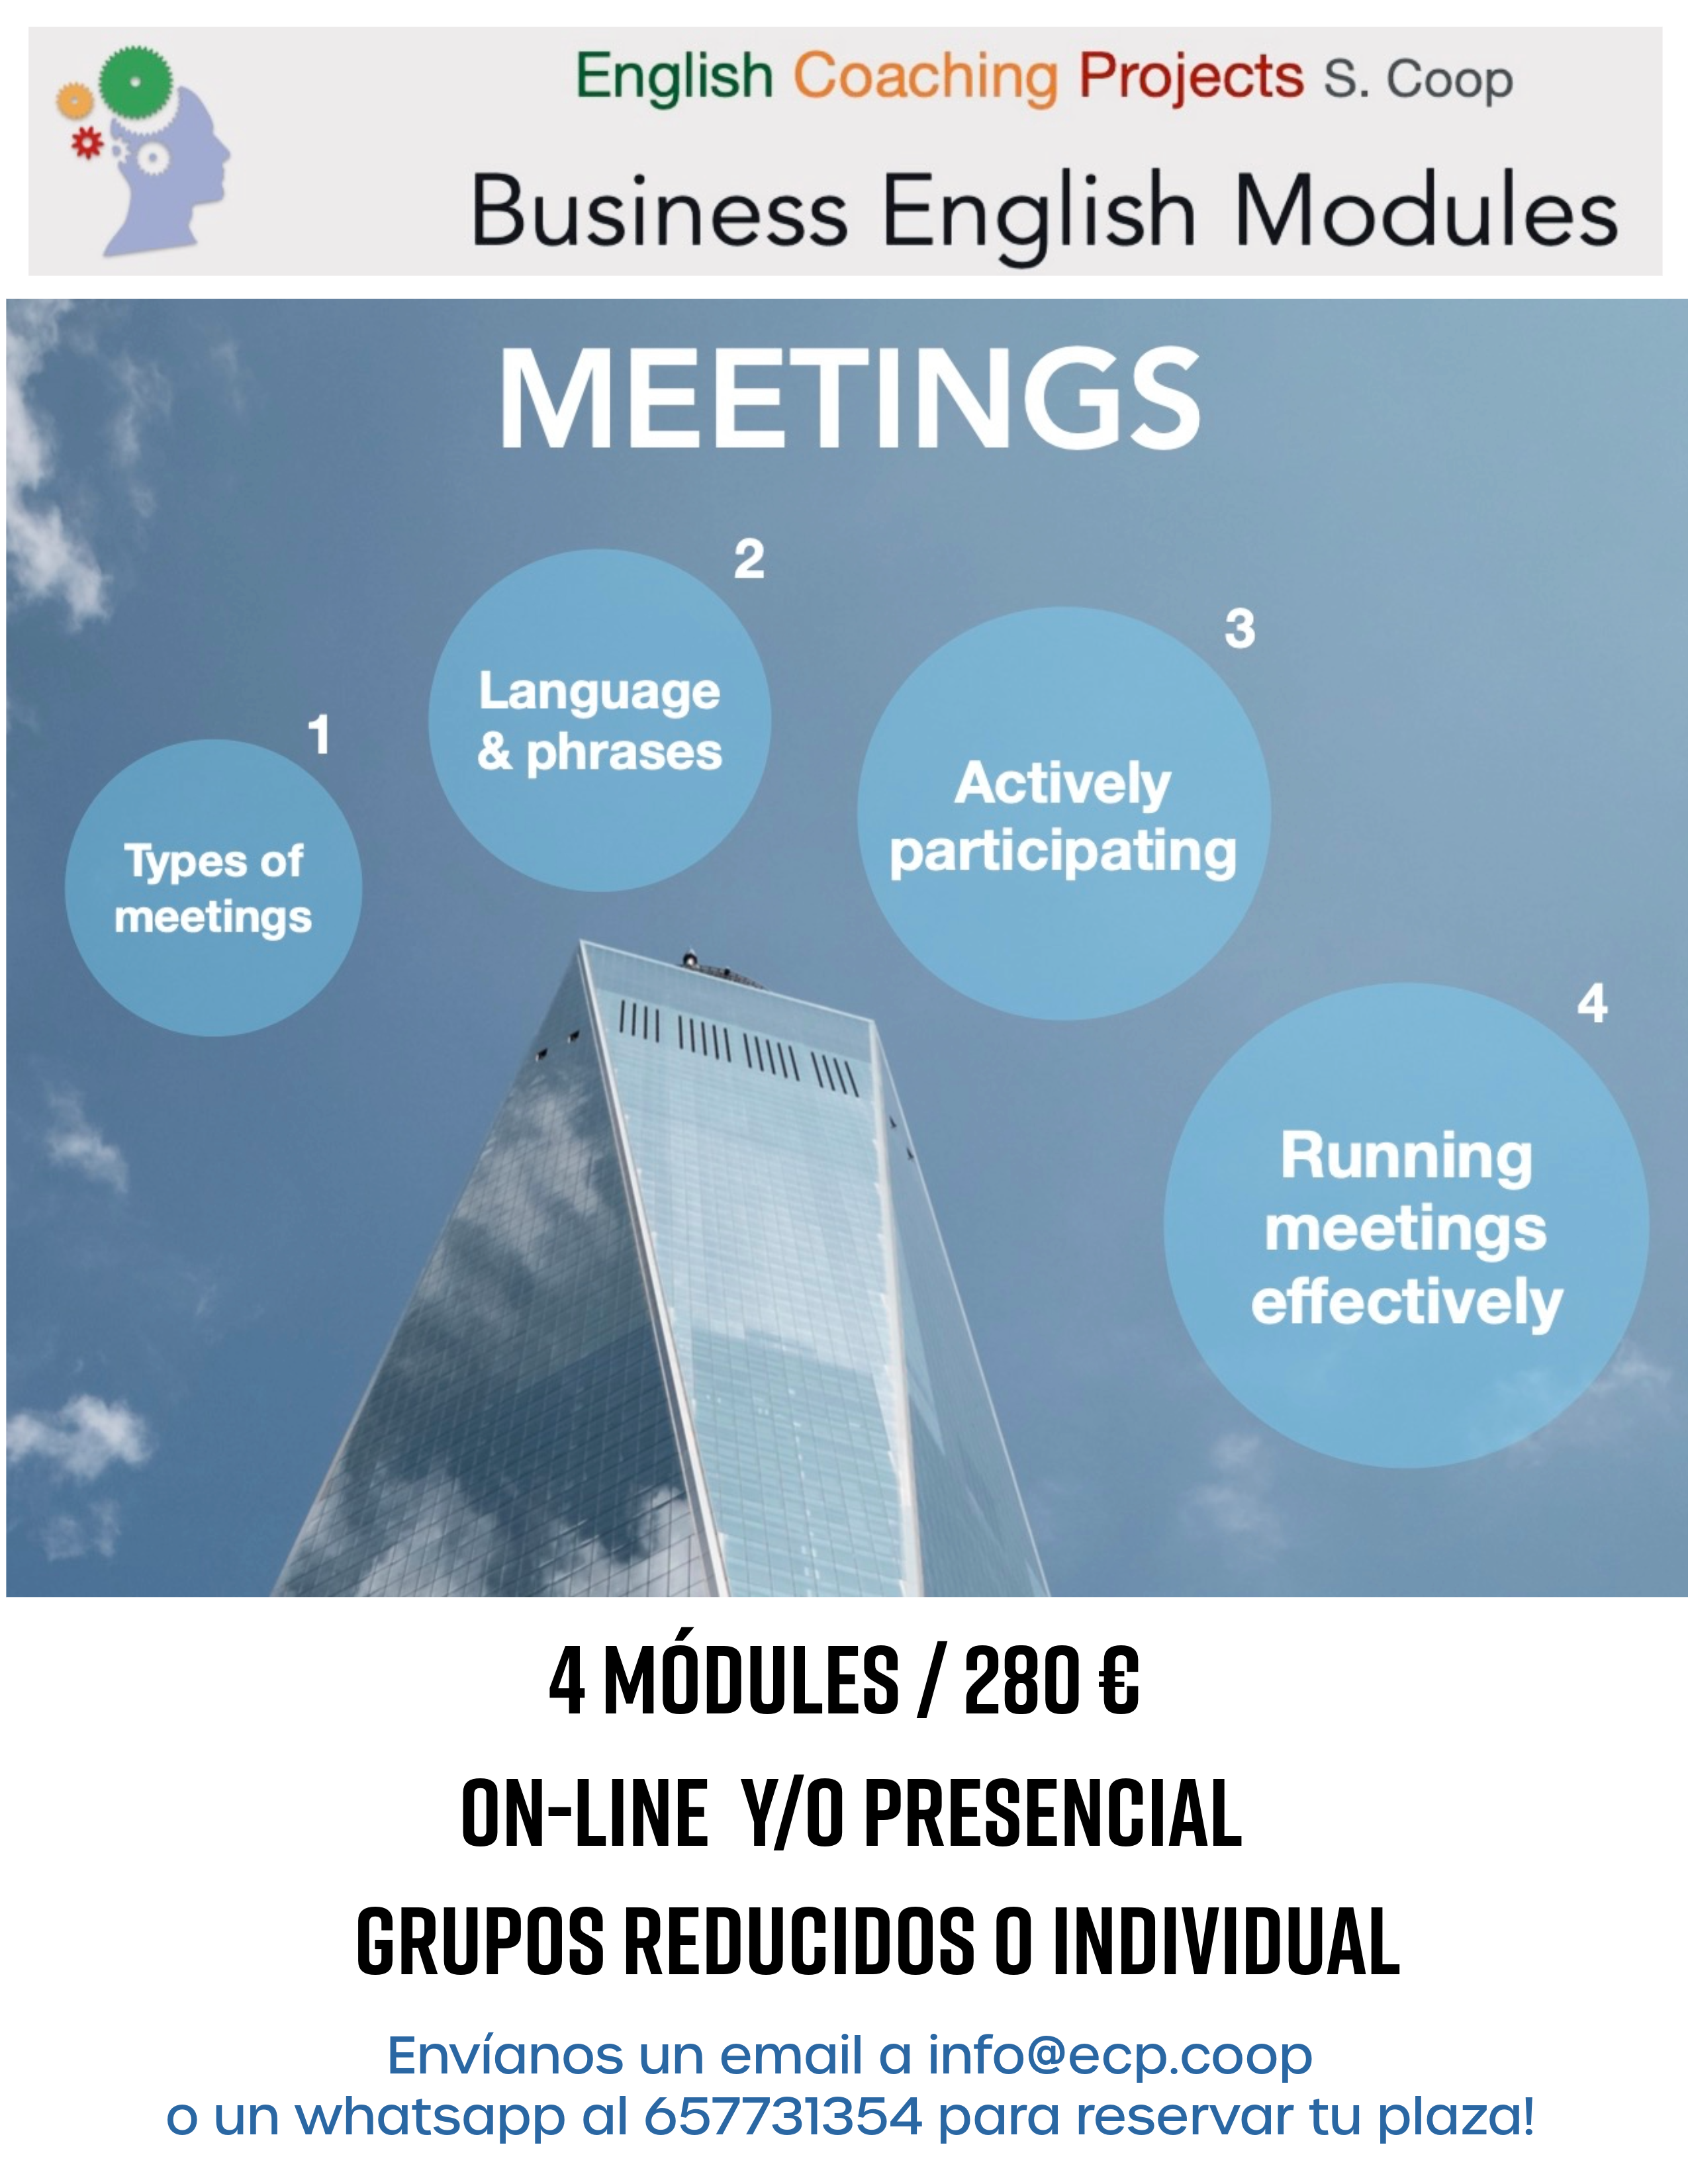 MEETINGS Business Modules